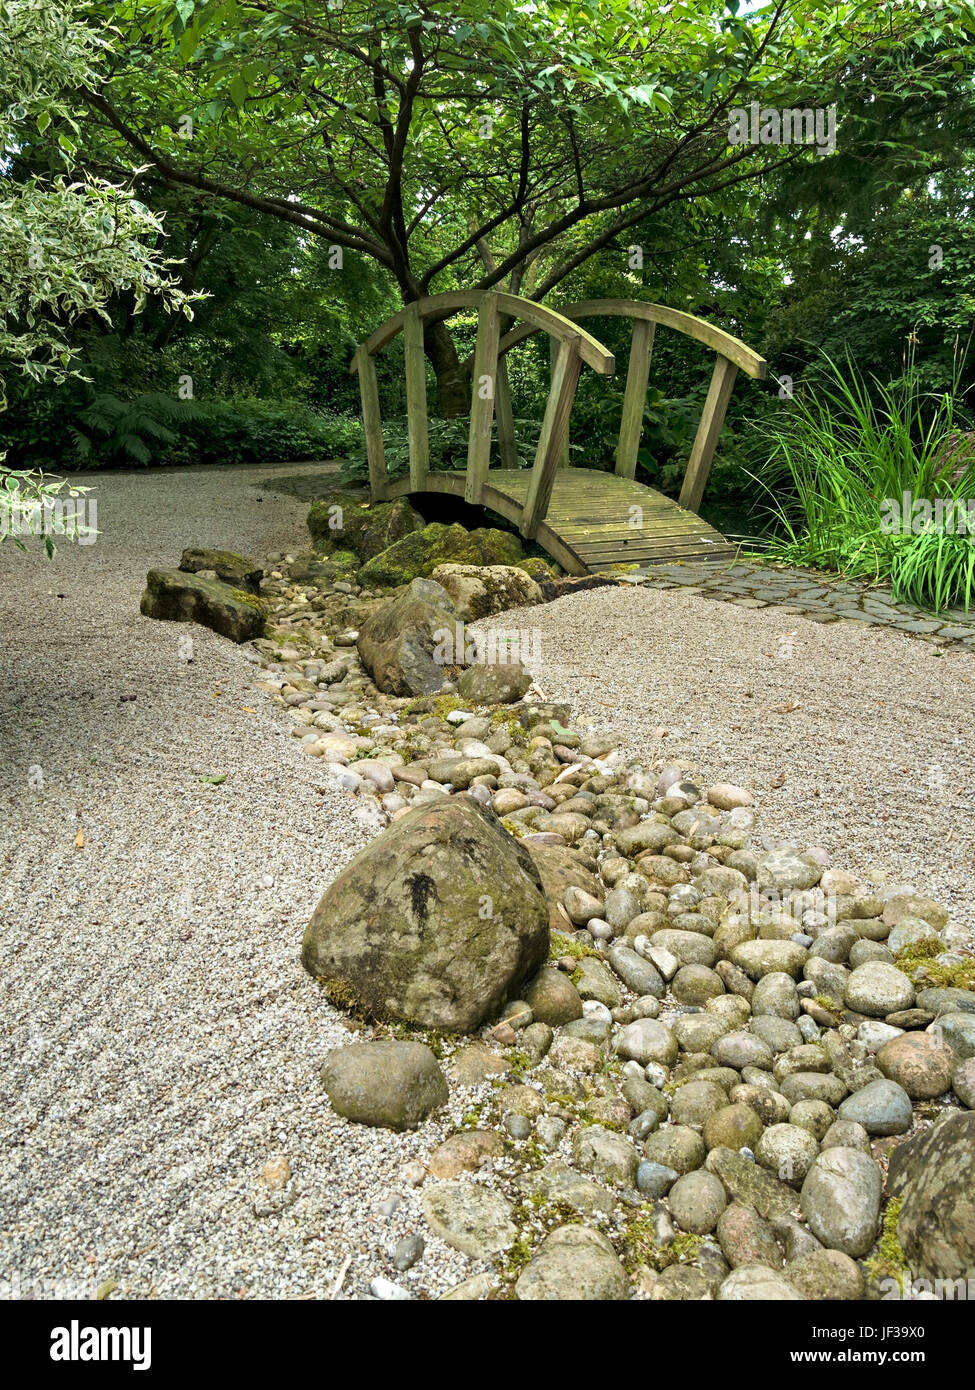 Japanese Zen styled garden with raked gravel, ornate wooden bridge and river of pebbles, Barnsdale Gardens, Rutland, England, UK. Stock Photo